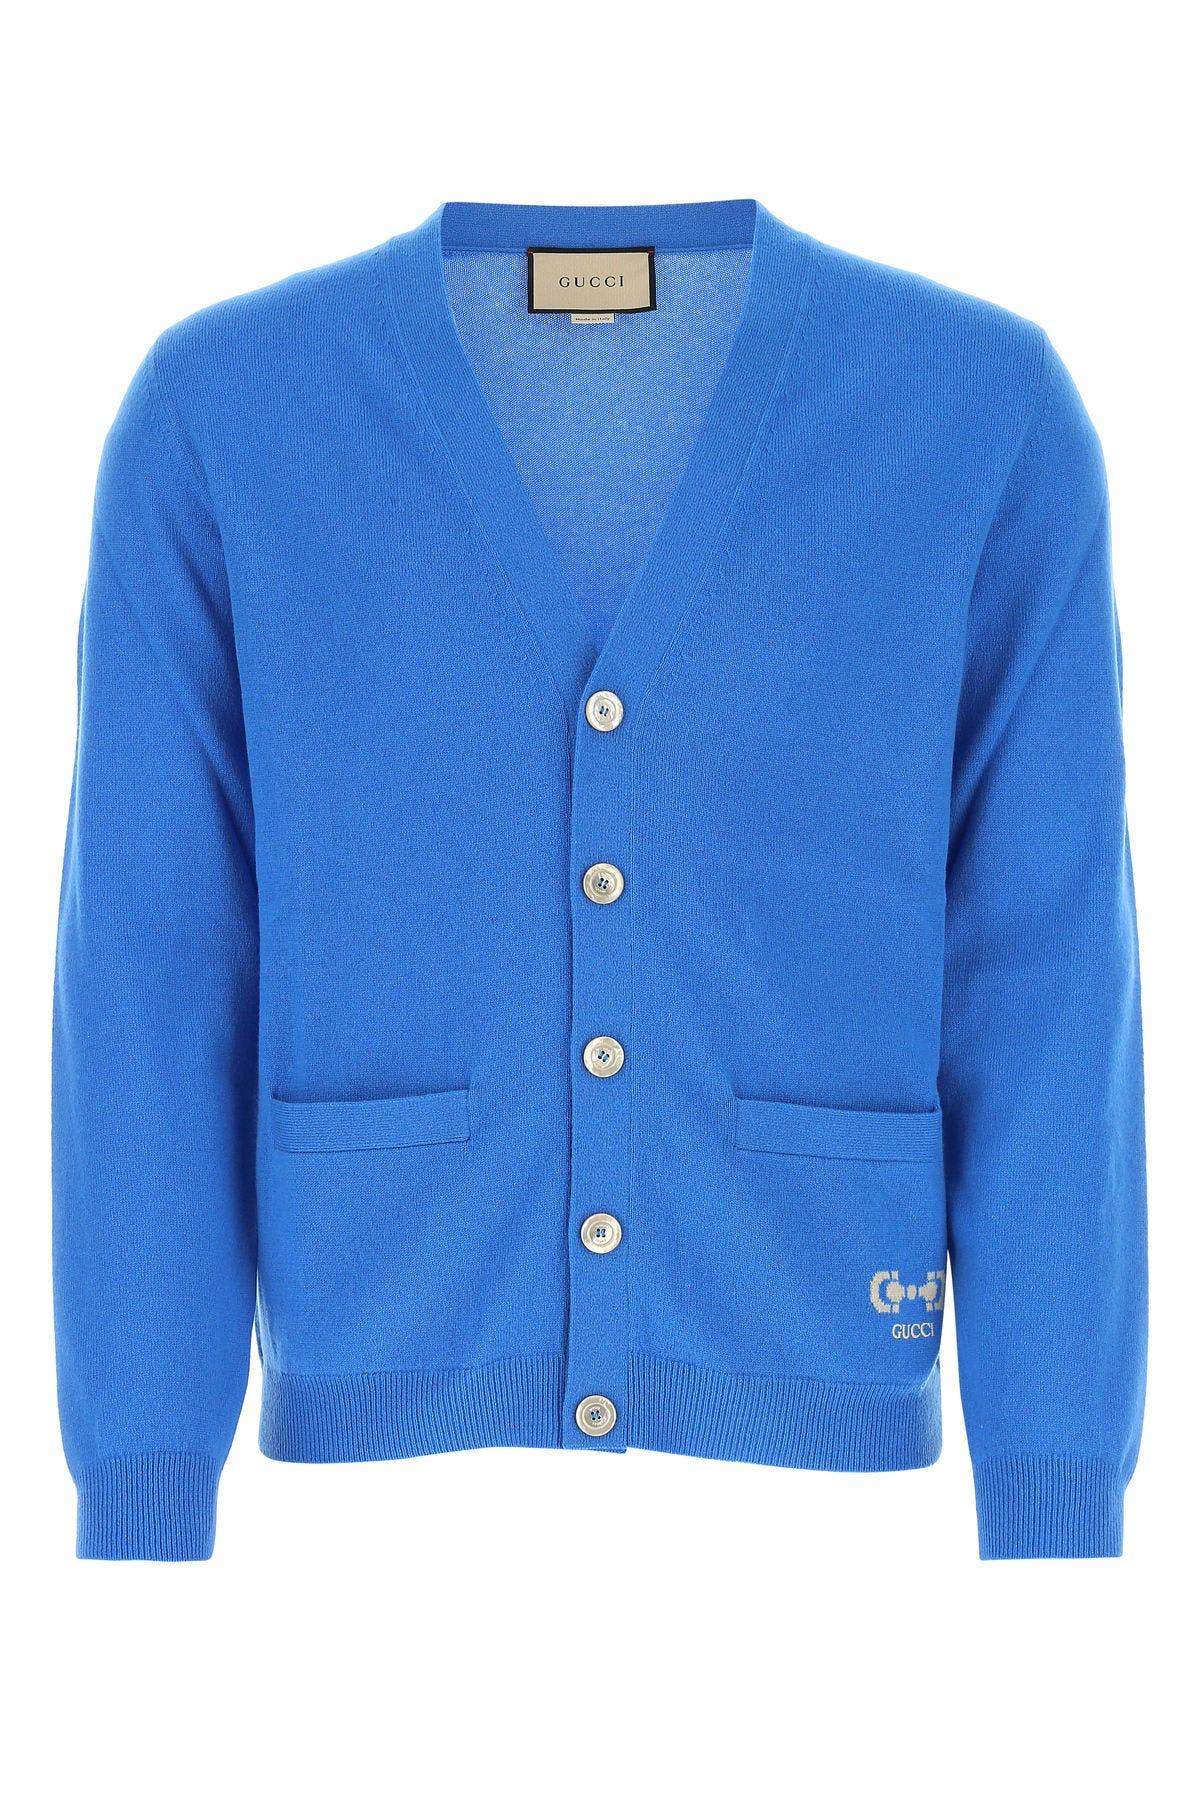 Shop Gucci Blue Cashmere Cardigan